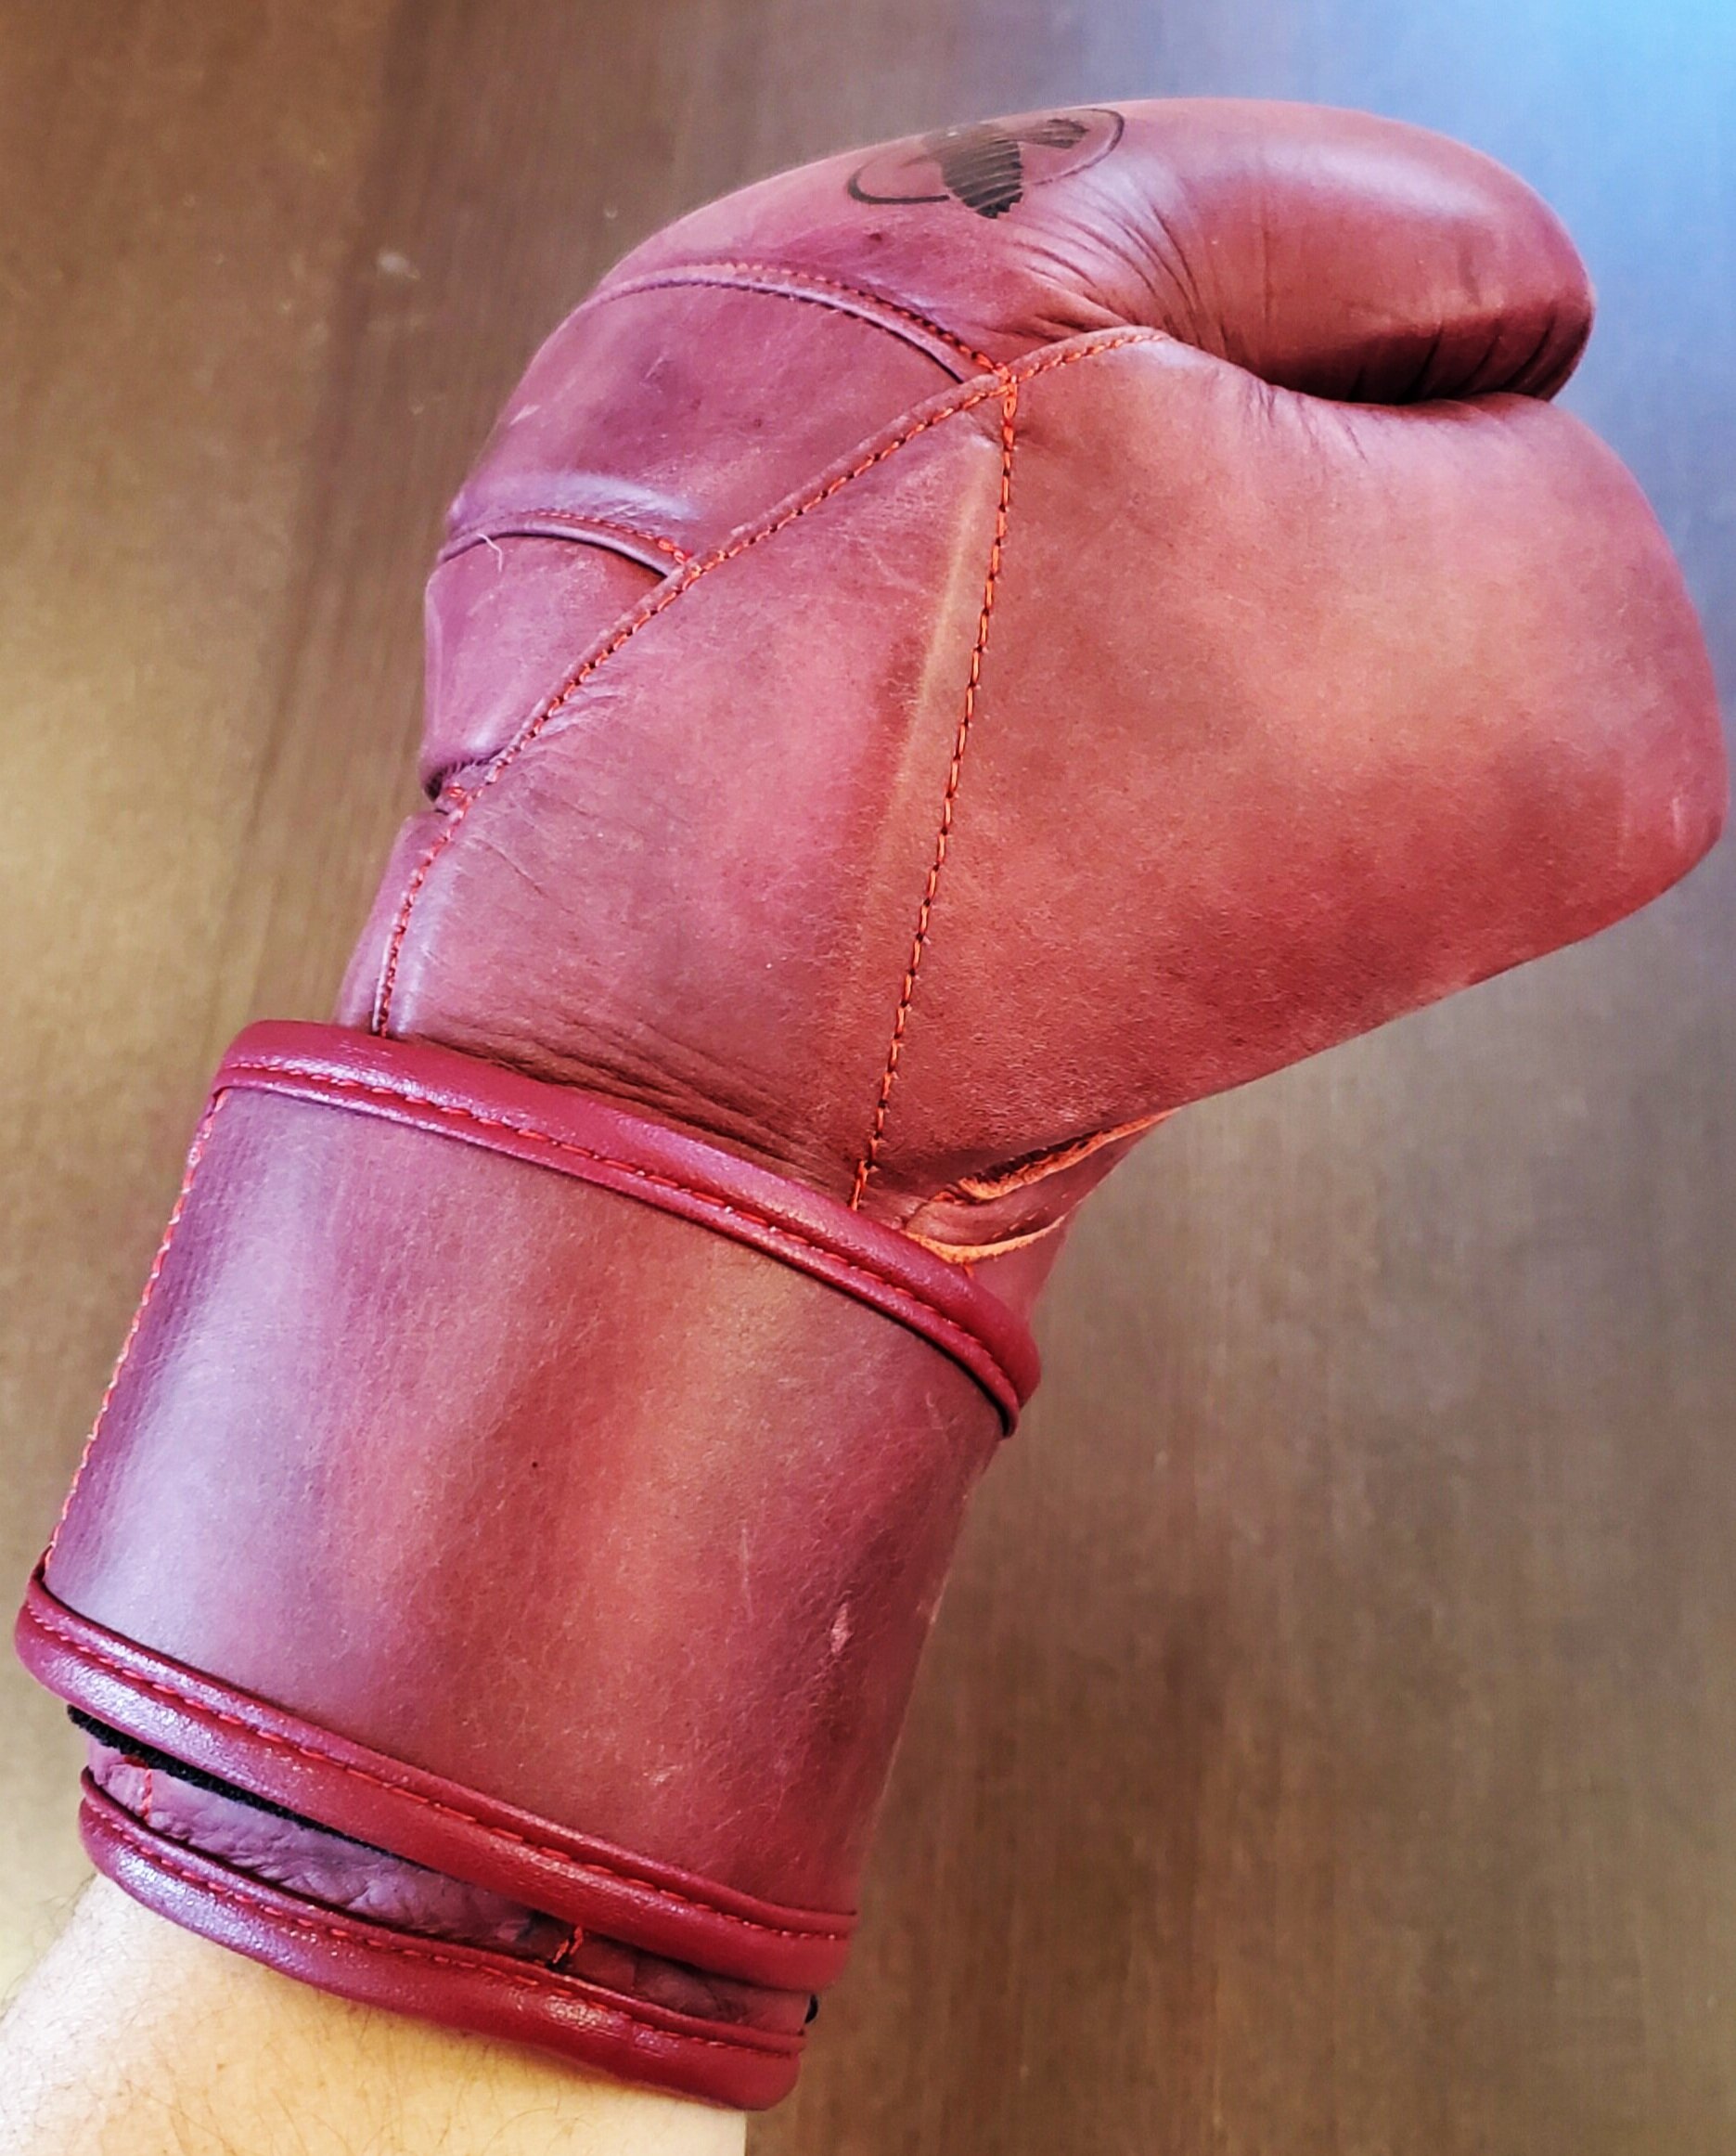 Hayabusa T3 LX Boxing Gloves Vintage / 16 oz